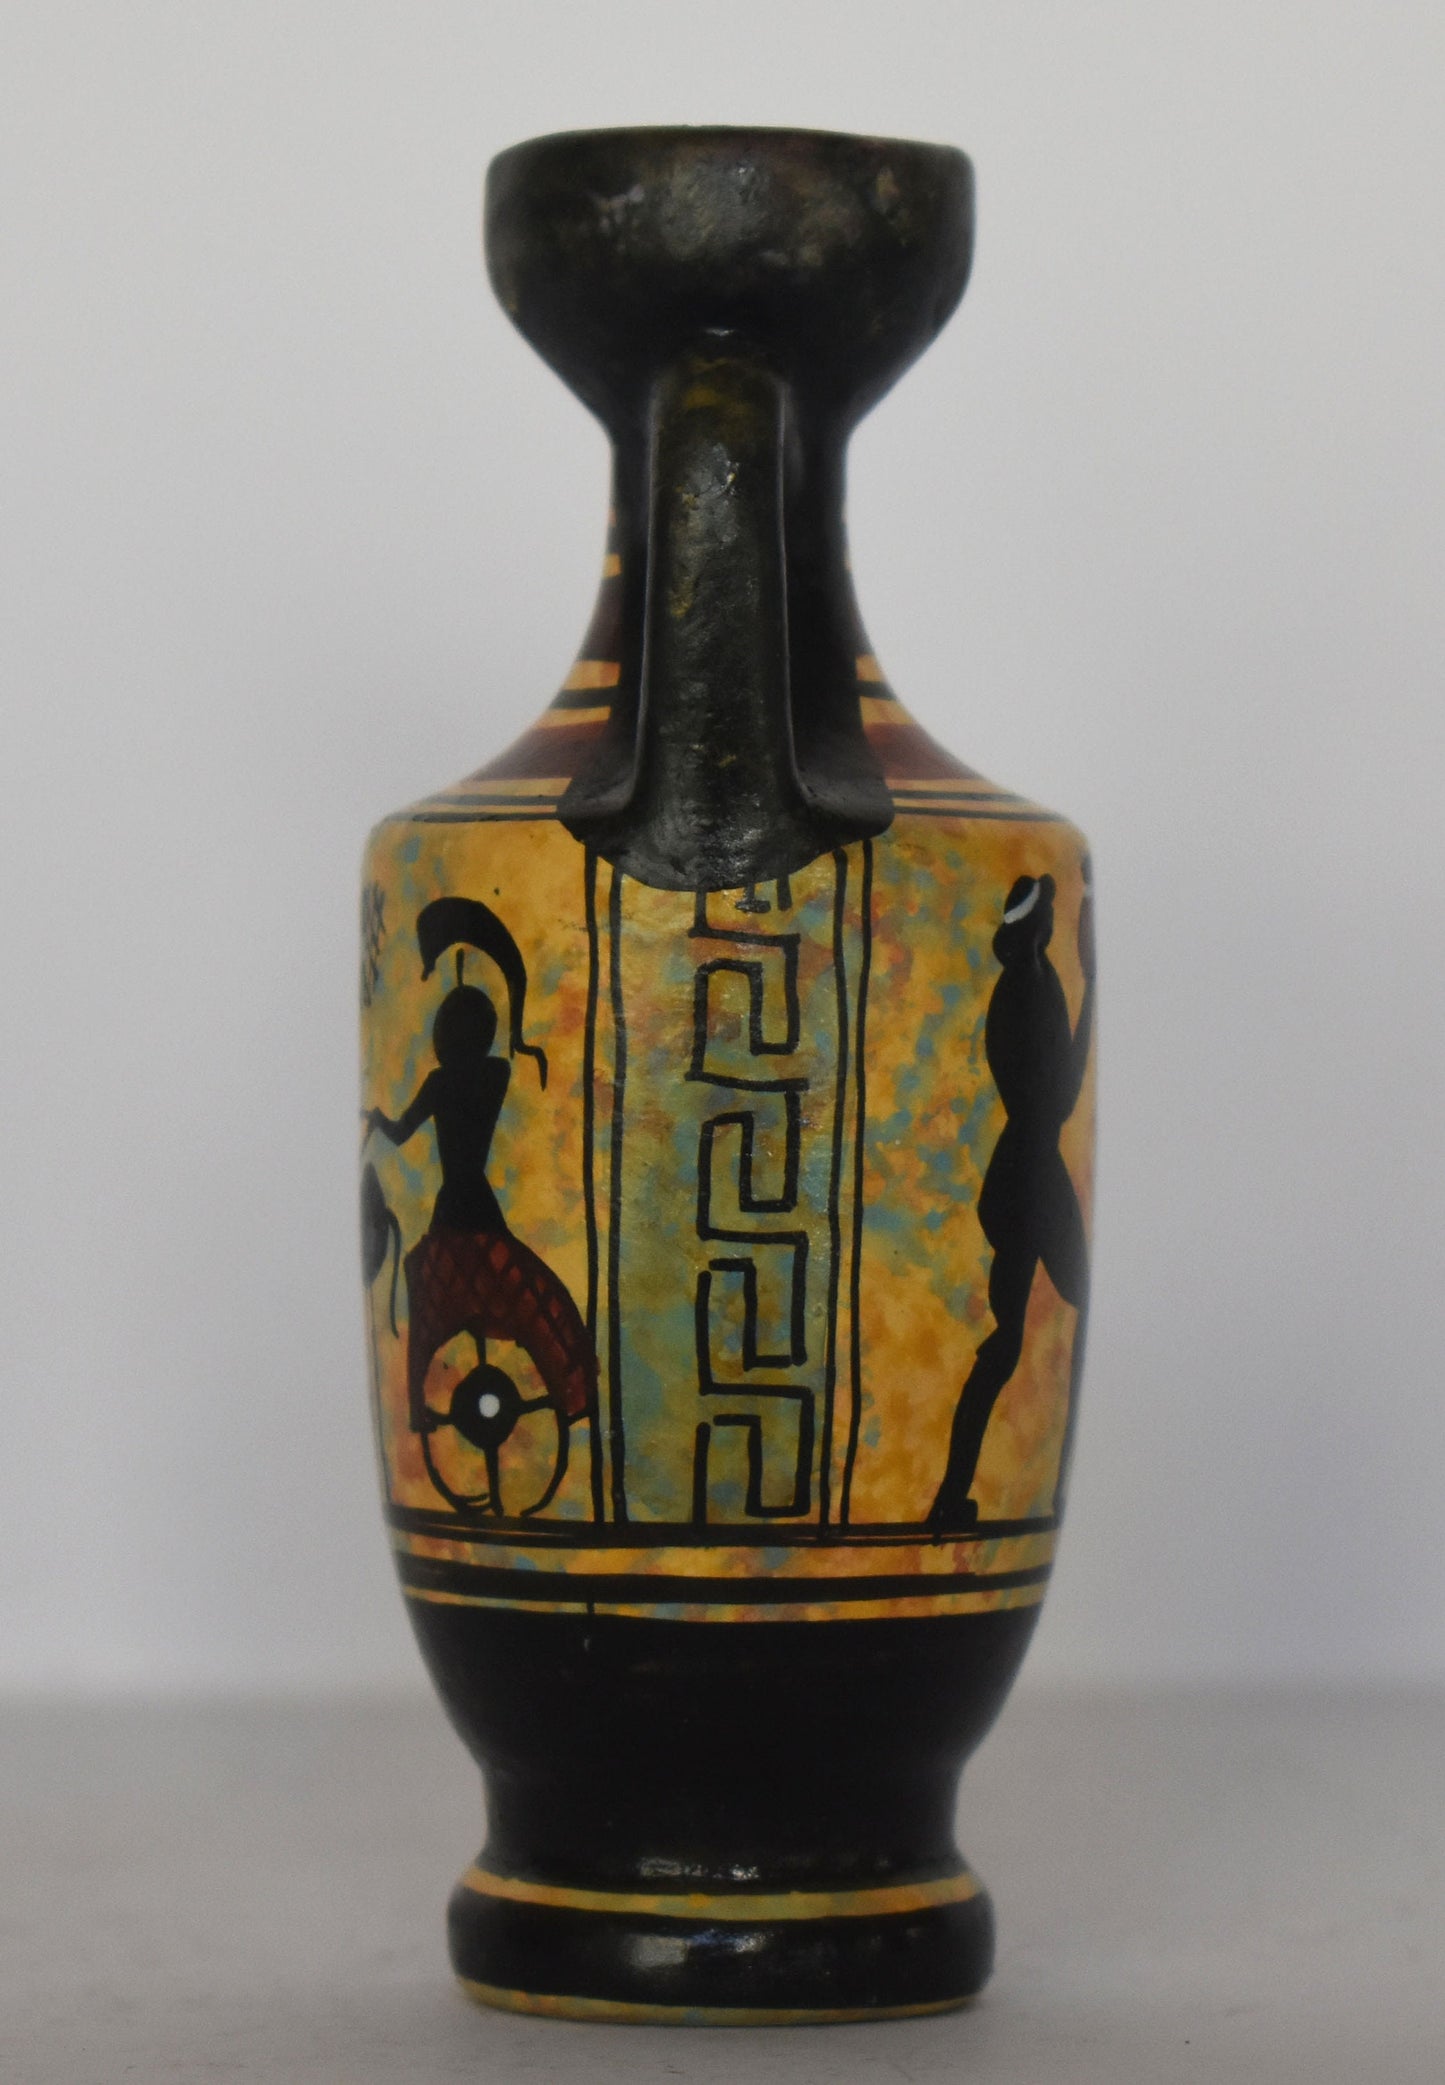 Ancient Greek lekythos - chariot and cupbearers - Miniature Ceramic piece - Geometric Period - Handmade in Greece